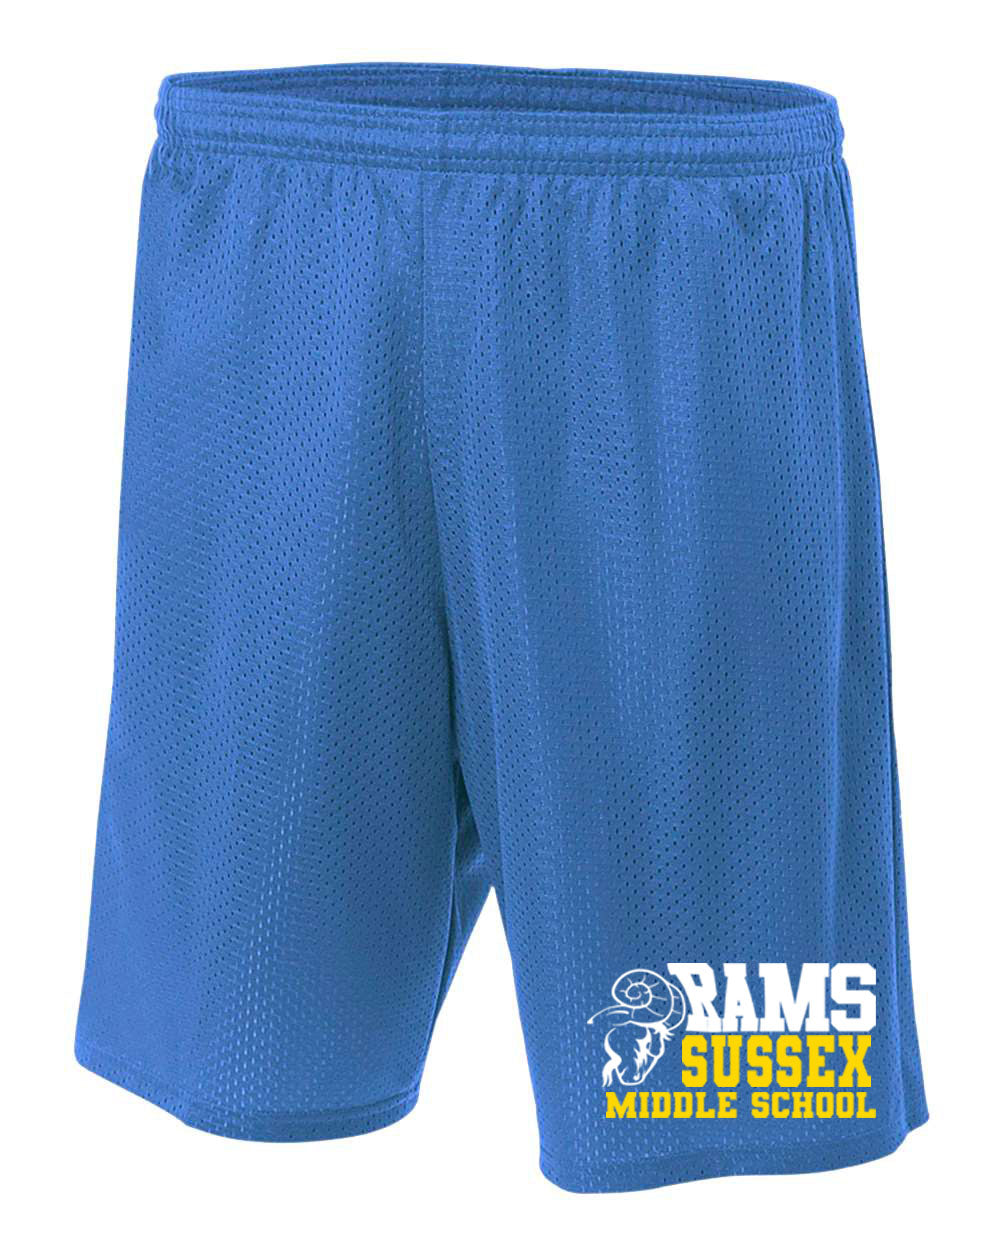 Sussex Middle Design 2 Mesh Shorts